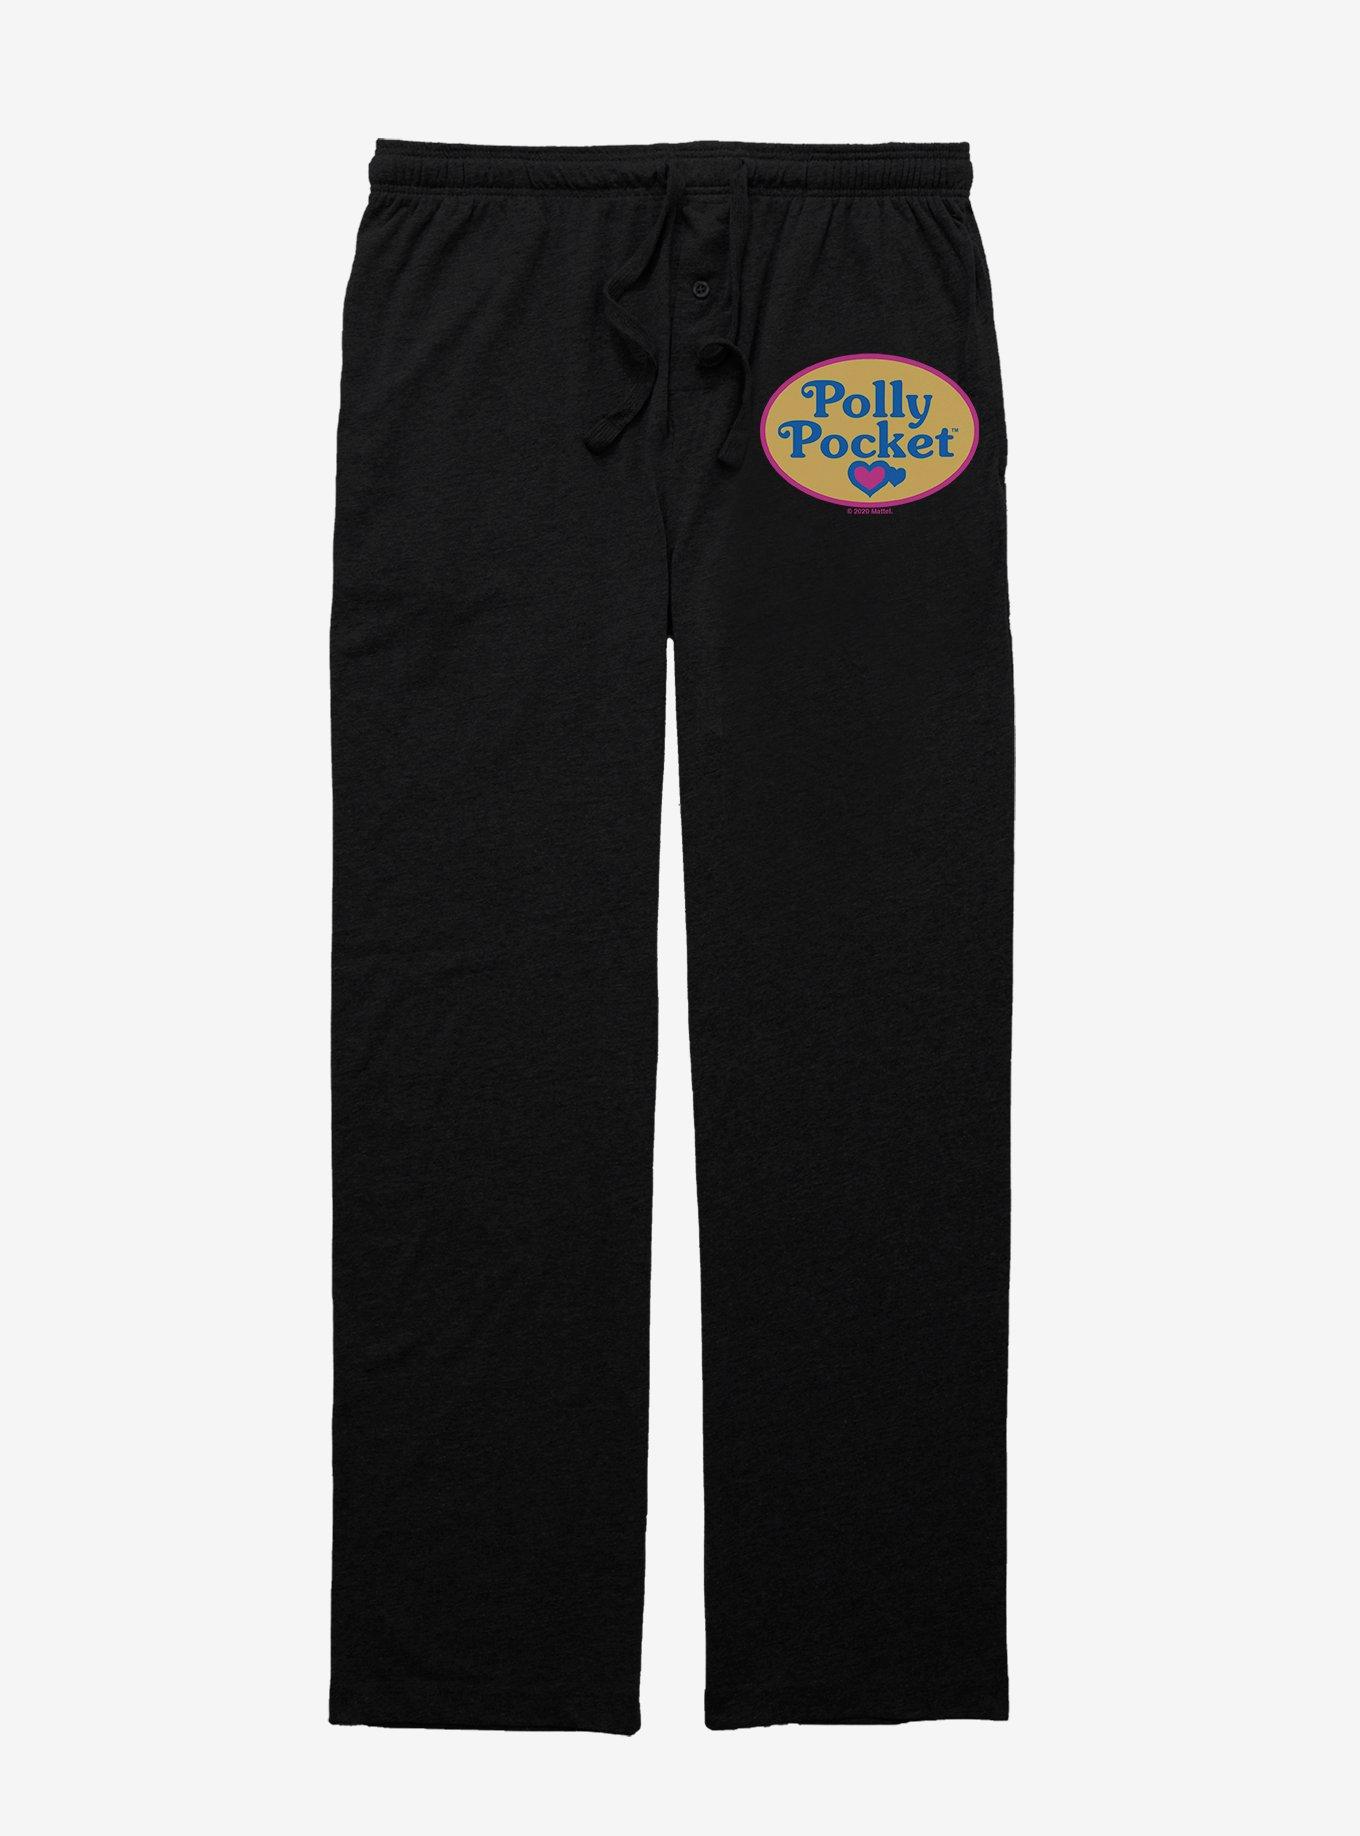 Polly Pocket Logo Pajama Pants, BLACK, hi-res